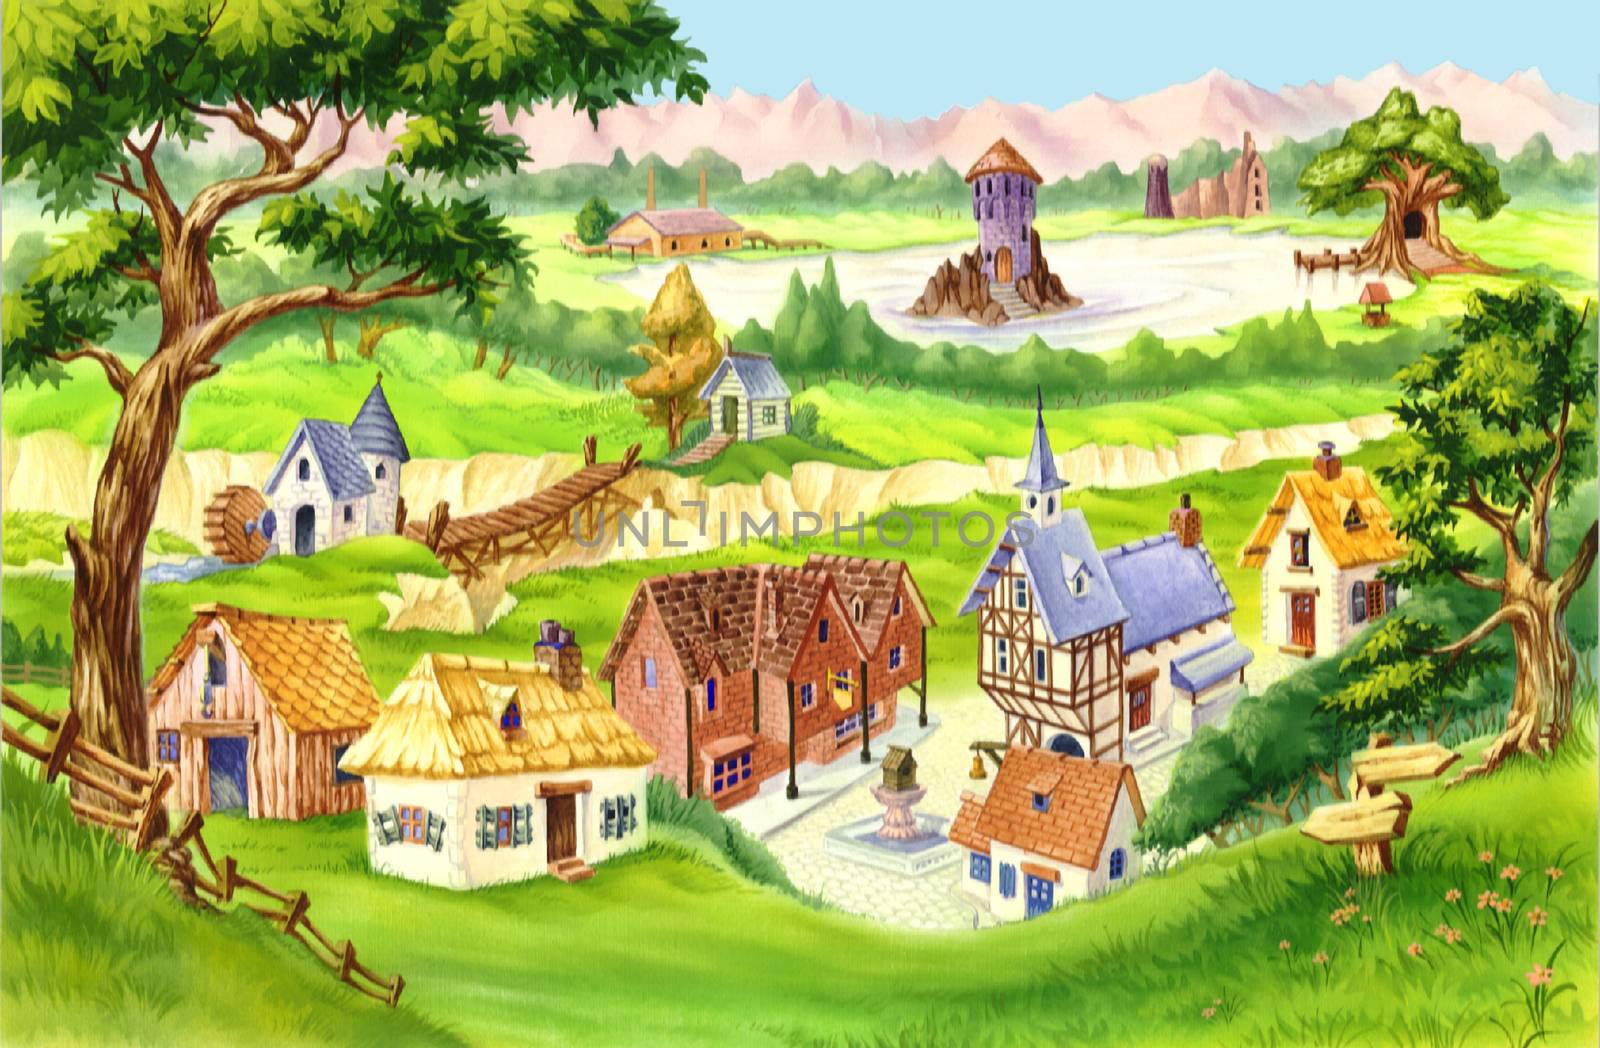 Fairytale Village by Multipedia